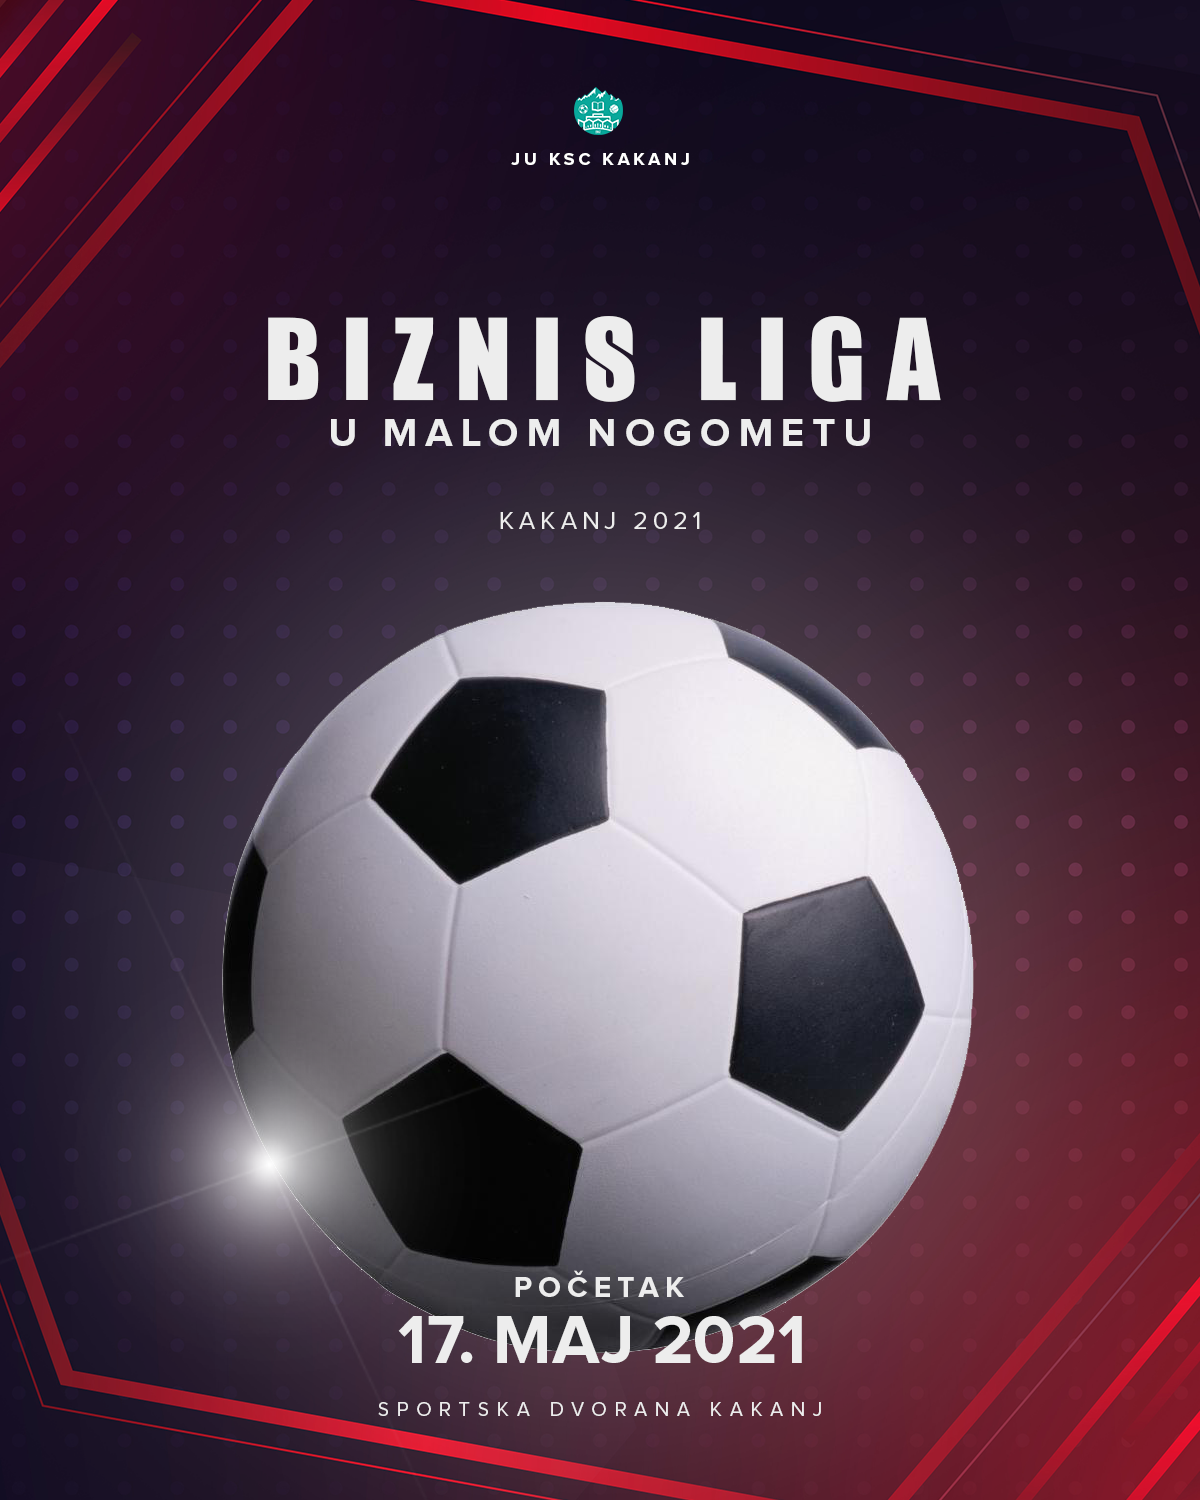 Takmičenje u malom nogometu “Biznis liga” počinje 17. maja u Sportskoj dvorani KSC Kakanj